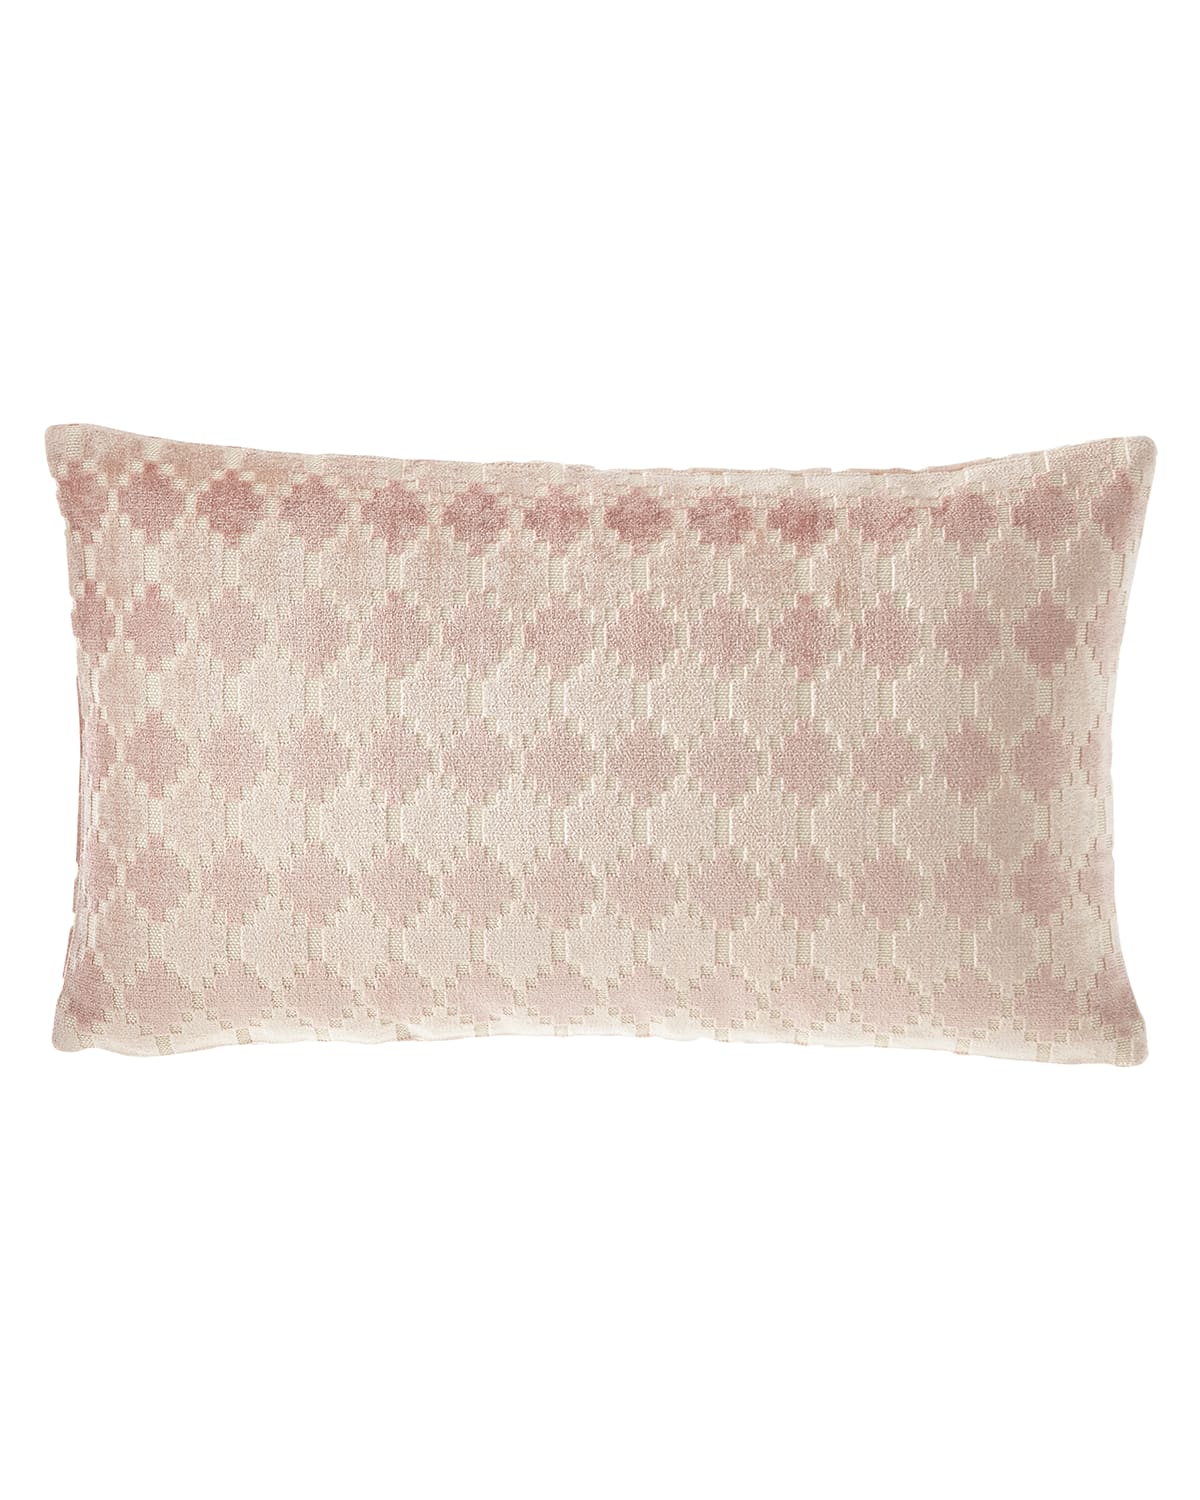 Image Jane Wilner Designs Samantha Velvet Decorative Pillow